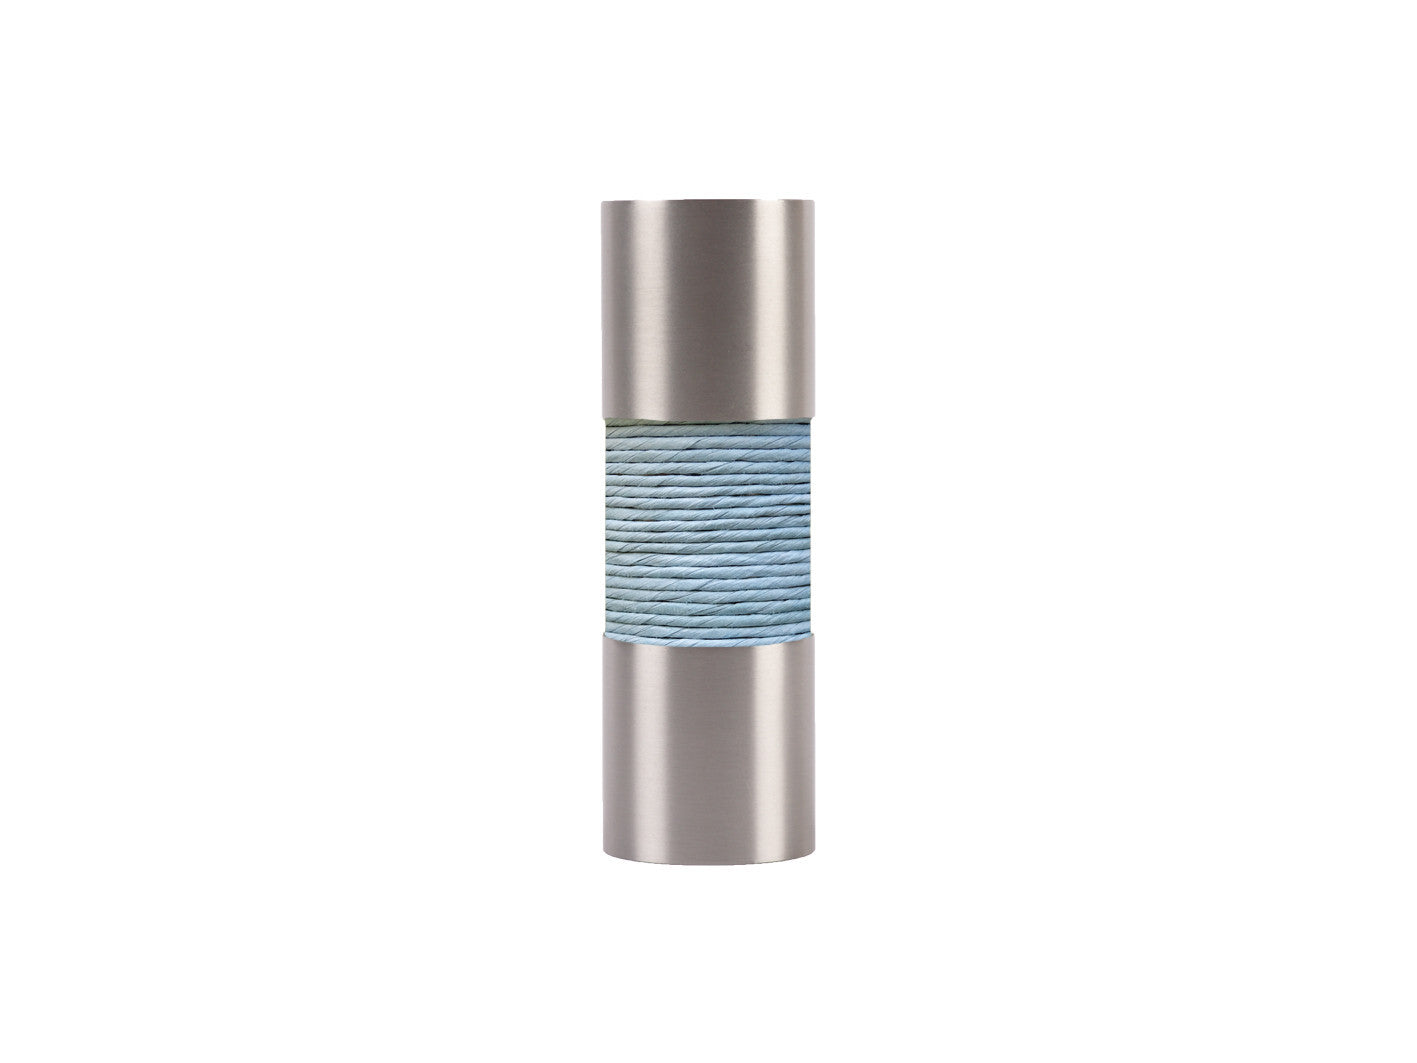 Mist blue curtain pole finial, stainless steel barrel, for 19mm diameter pole